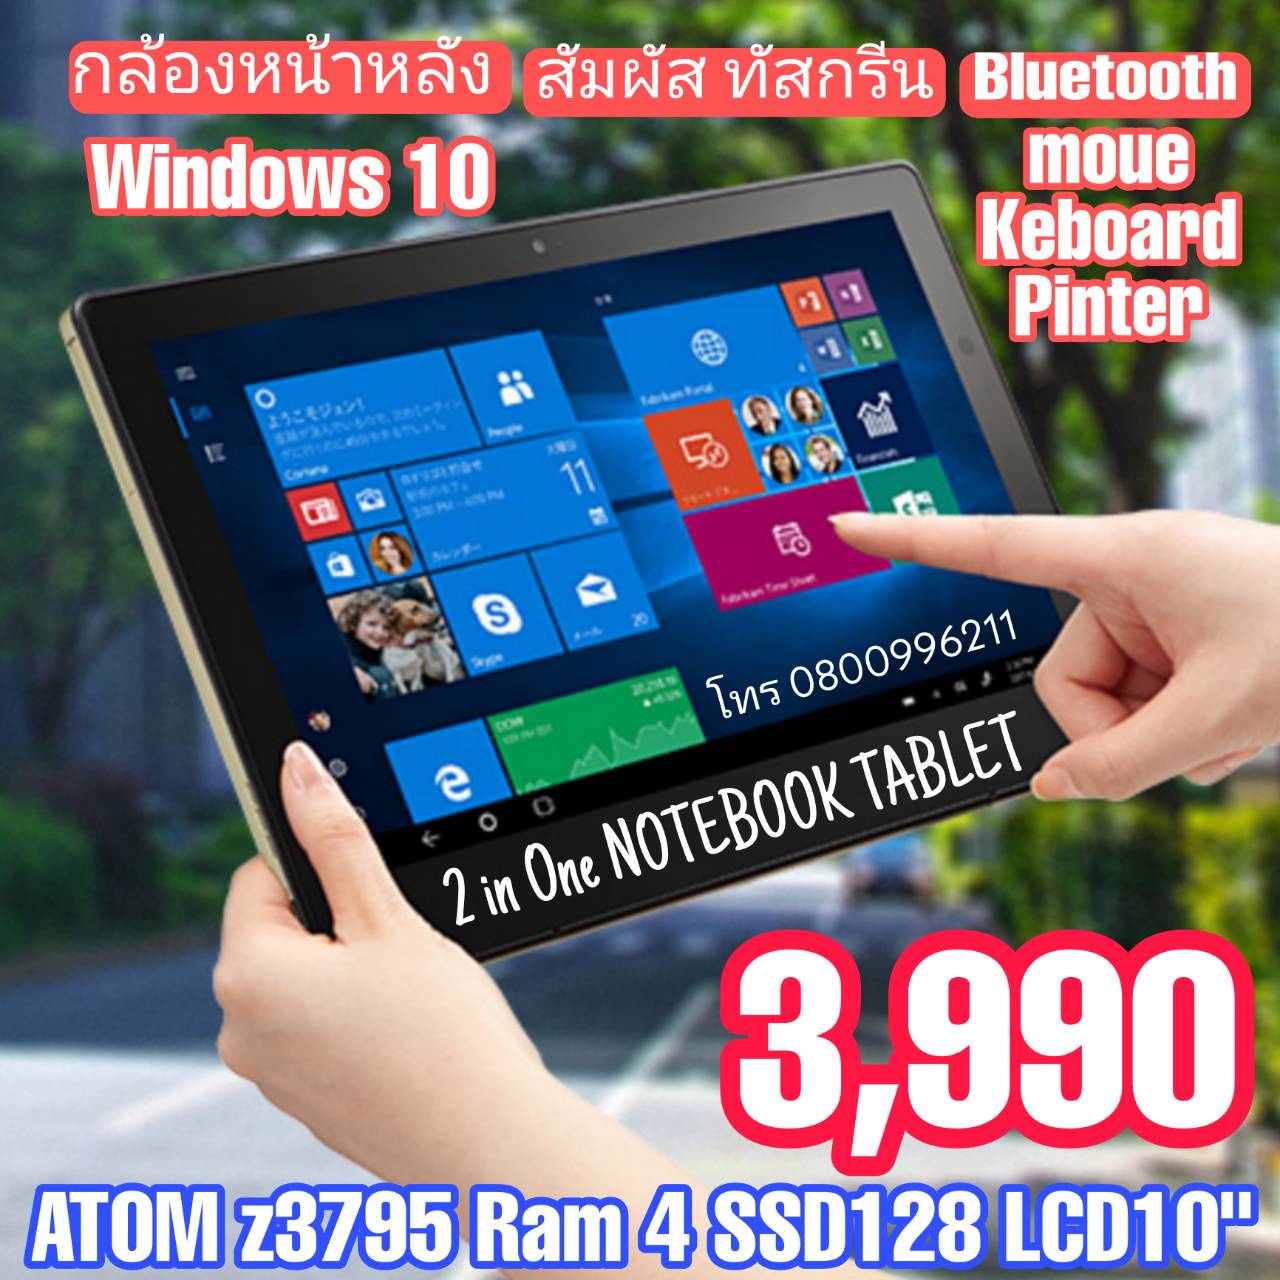 NOTEBOOK tablet 2 in One กล้องหน้าหลัง Windows10 แถมSofecase ฟรี